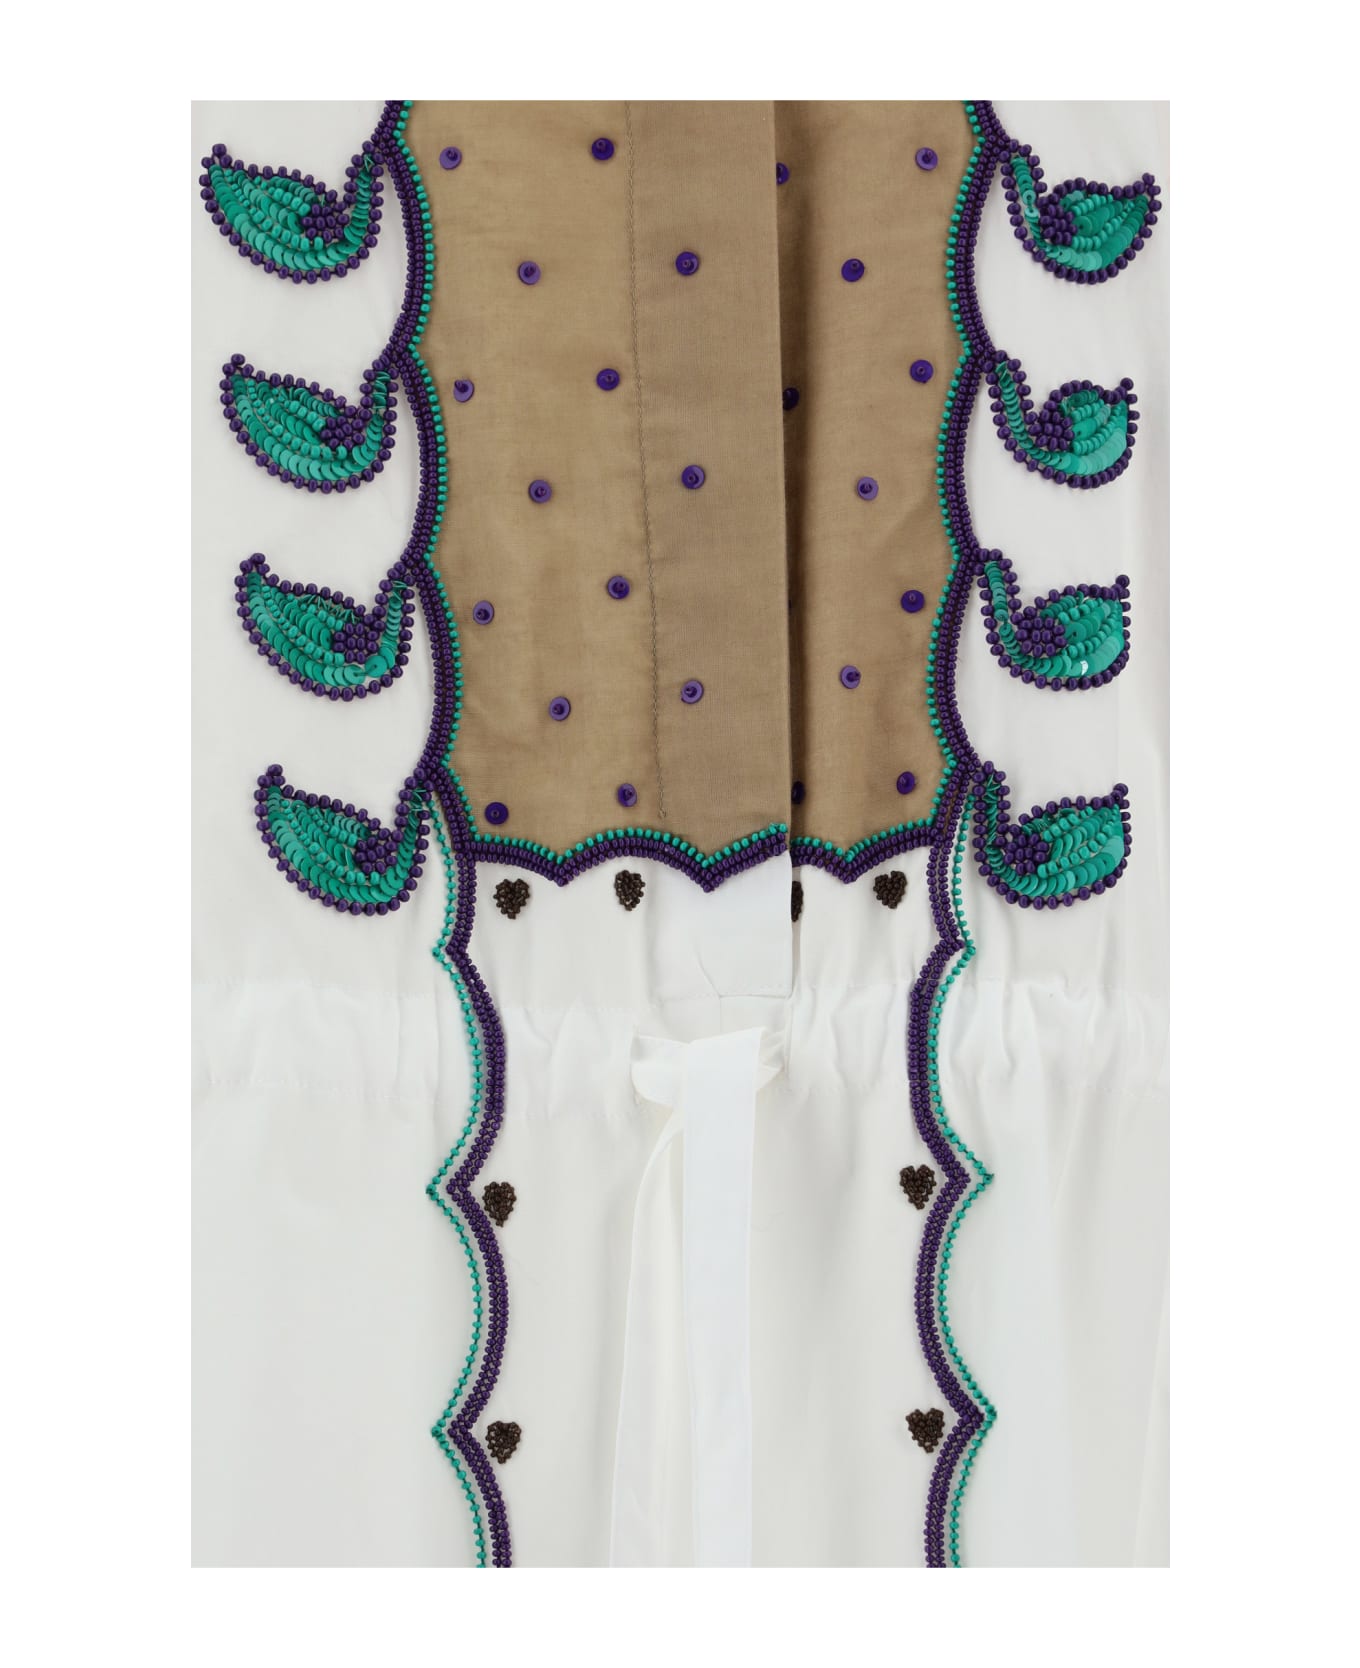 Valentino Emrodied Dress - Bianco/multicolor